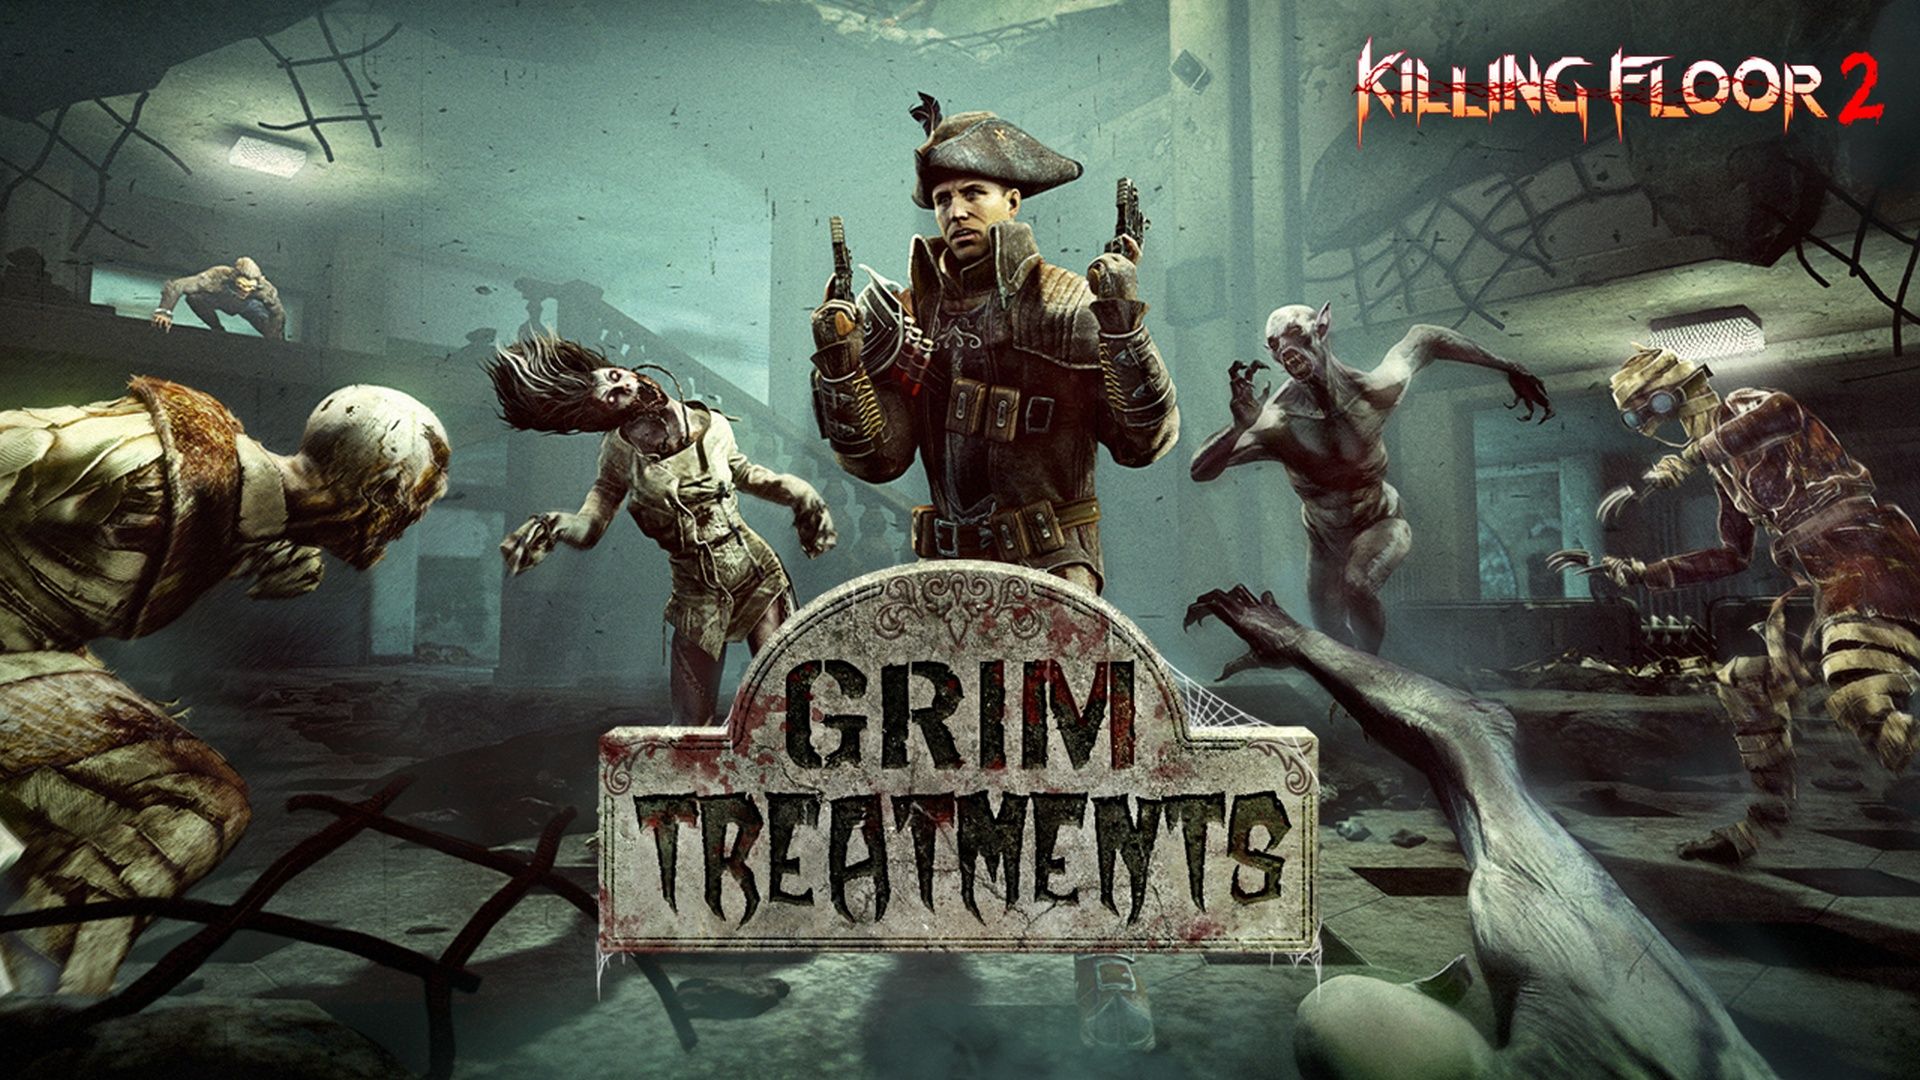 New Tricks and Treats in the Killing Floor 2: Grim Treatments Halloween Update